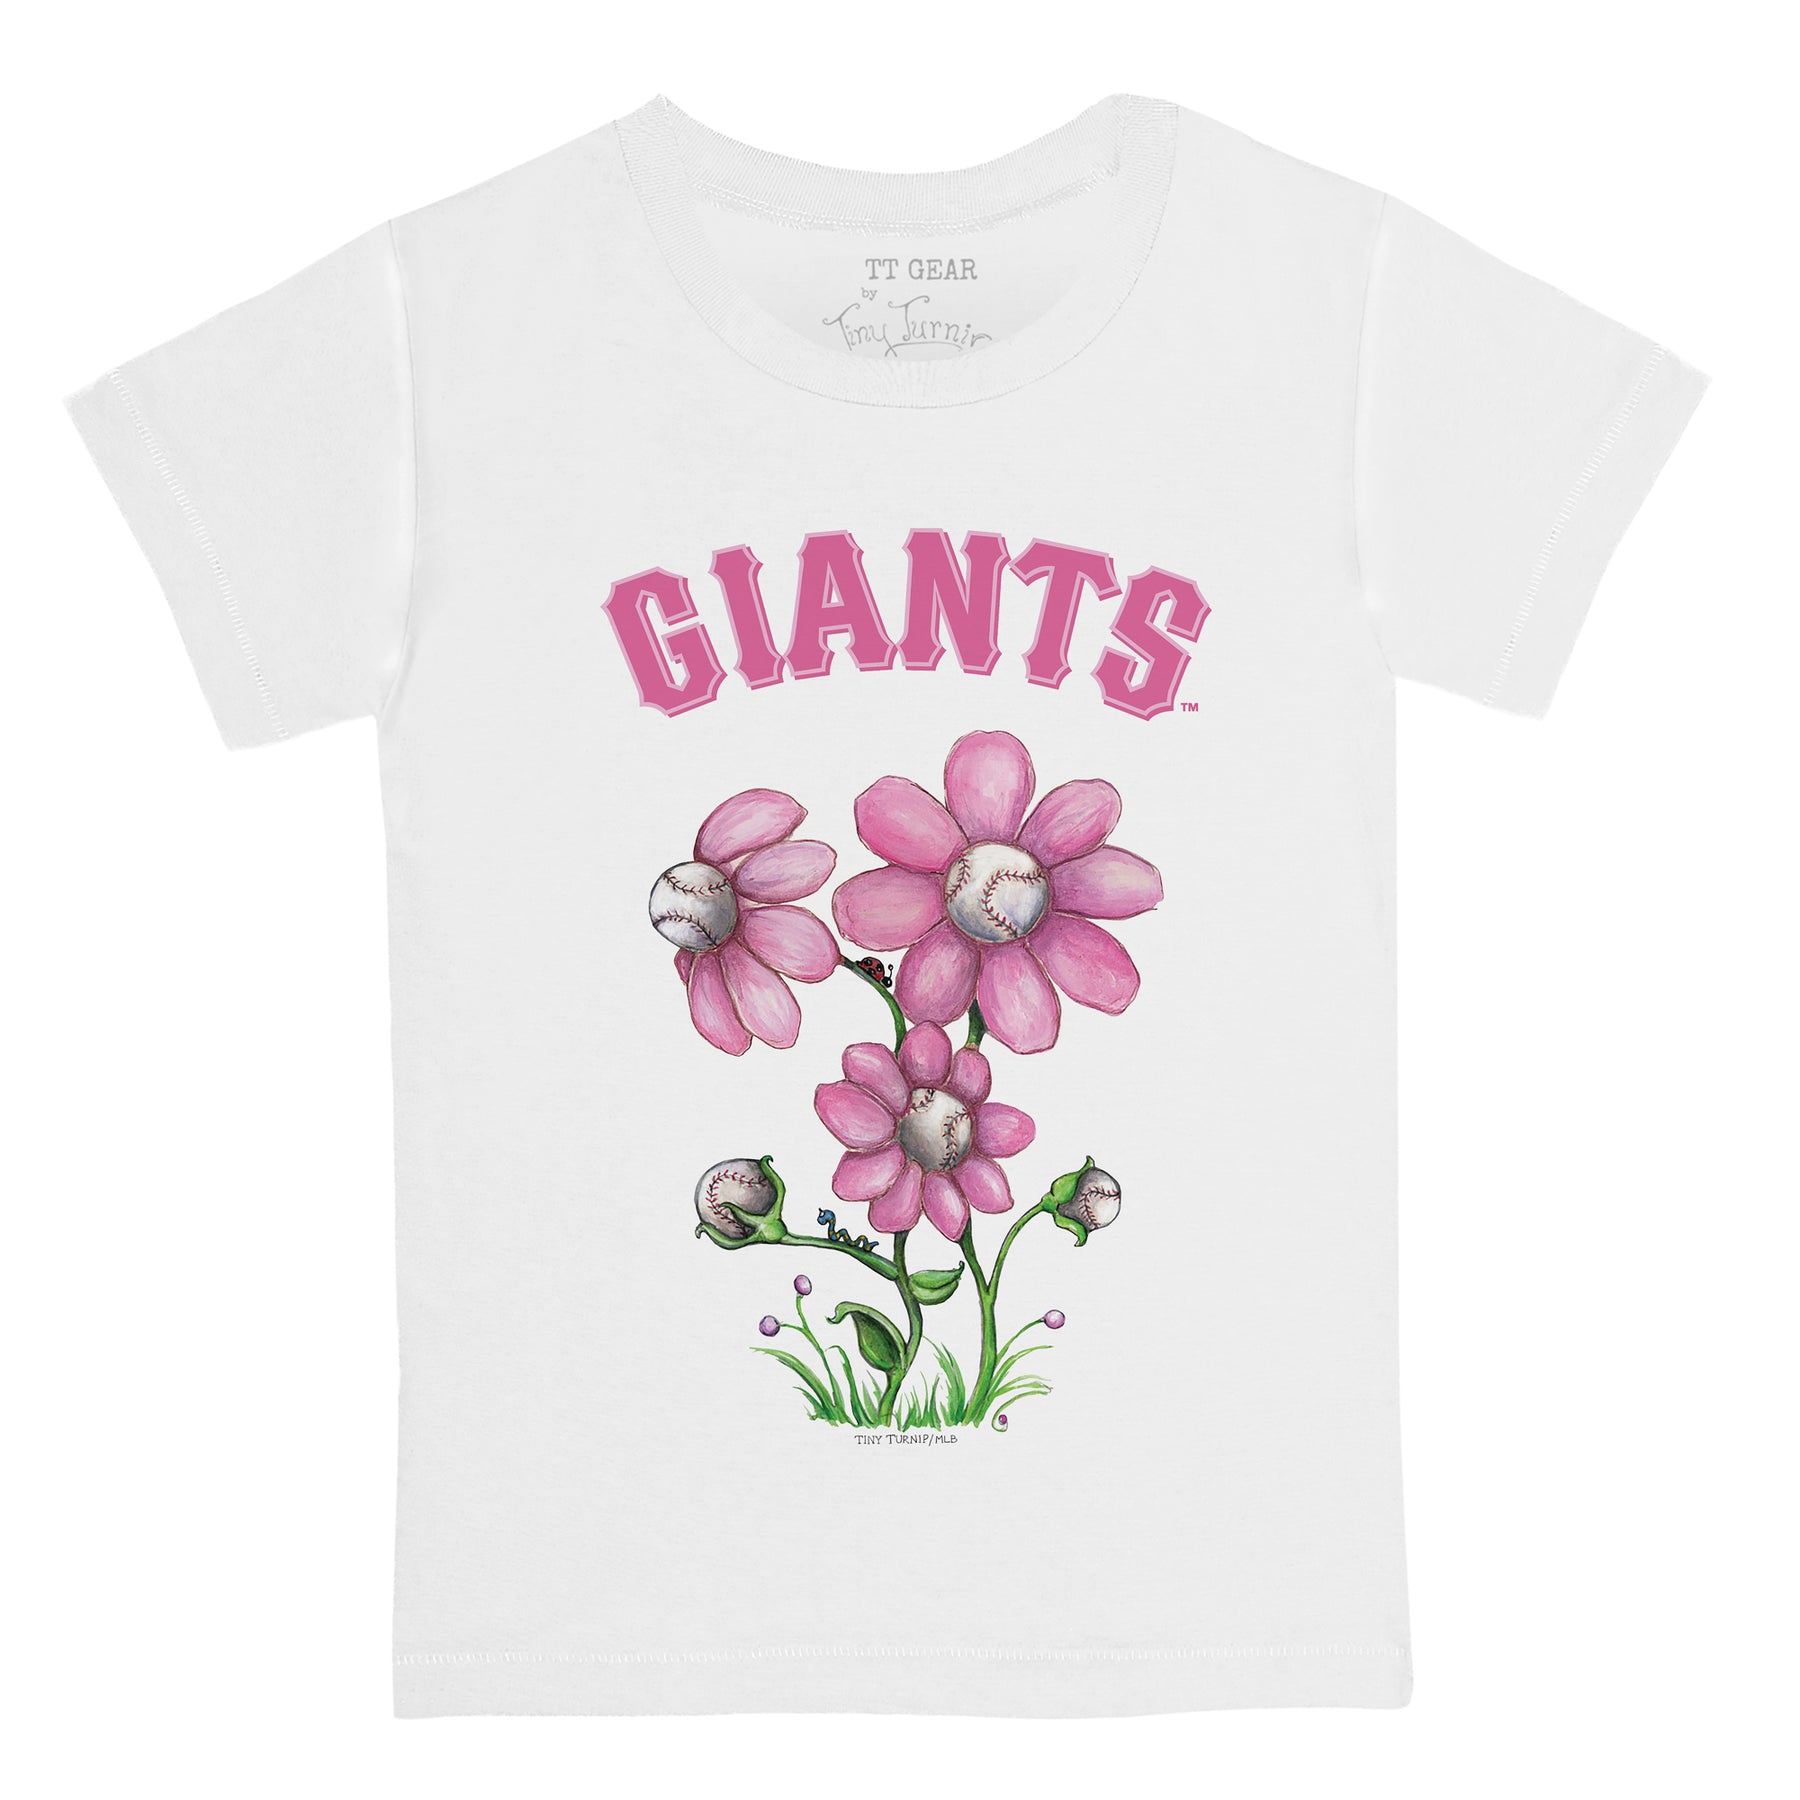 San Francisco Giants Blooming Baseballs Tee Shirt